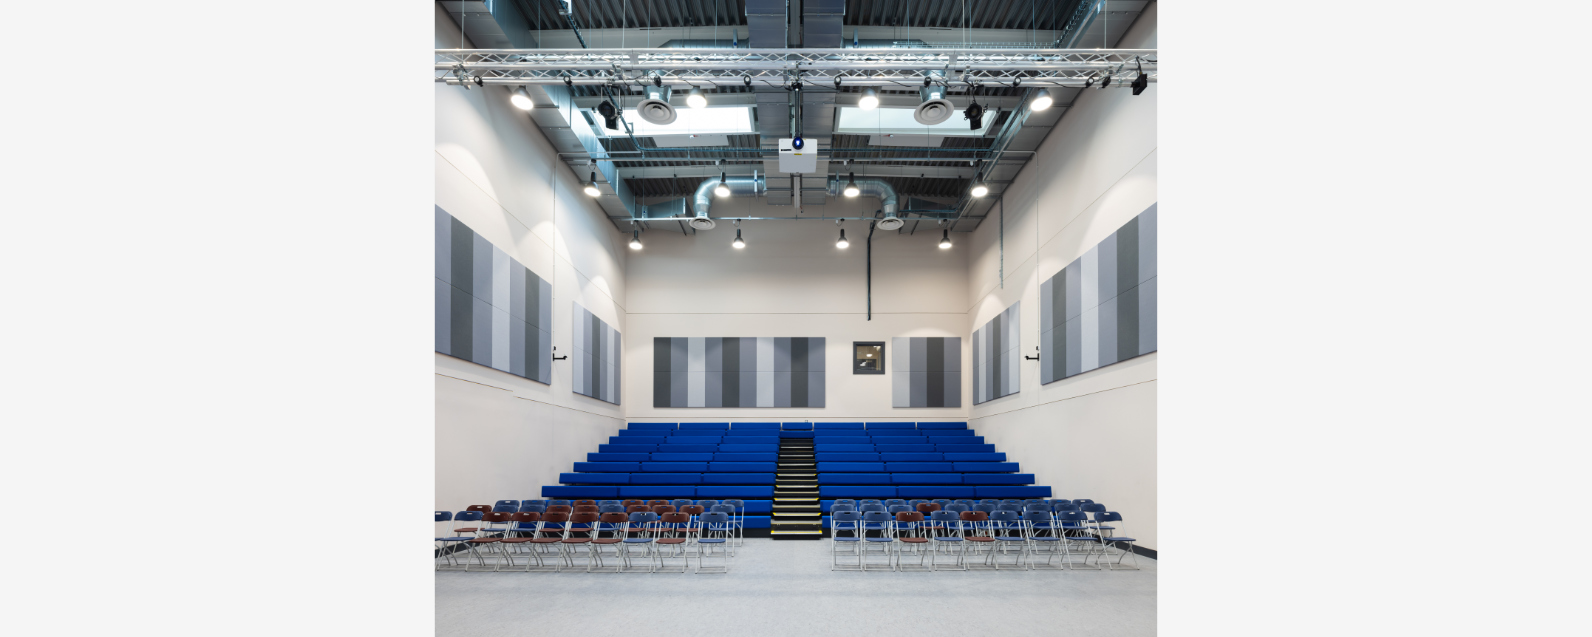 LSI-Architects-Harlington-School-Middlesex